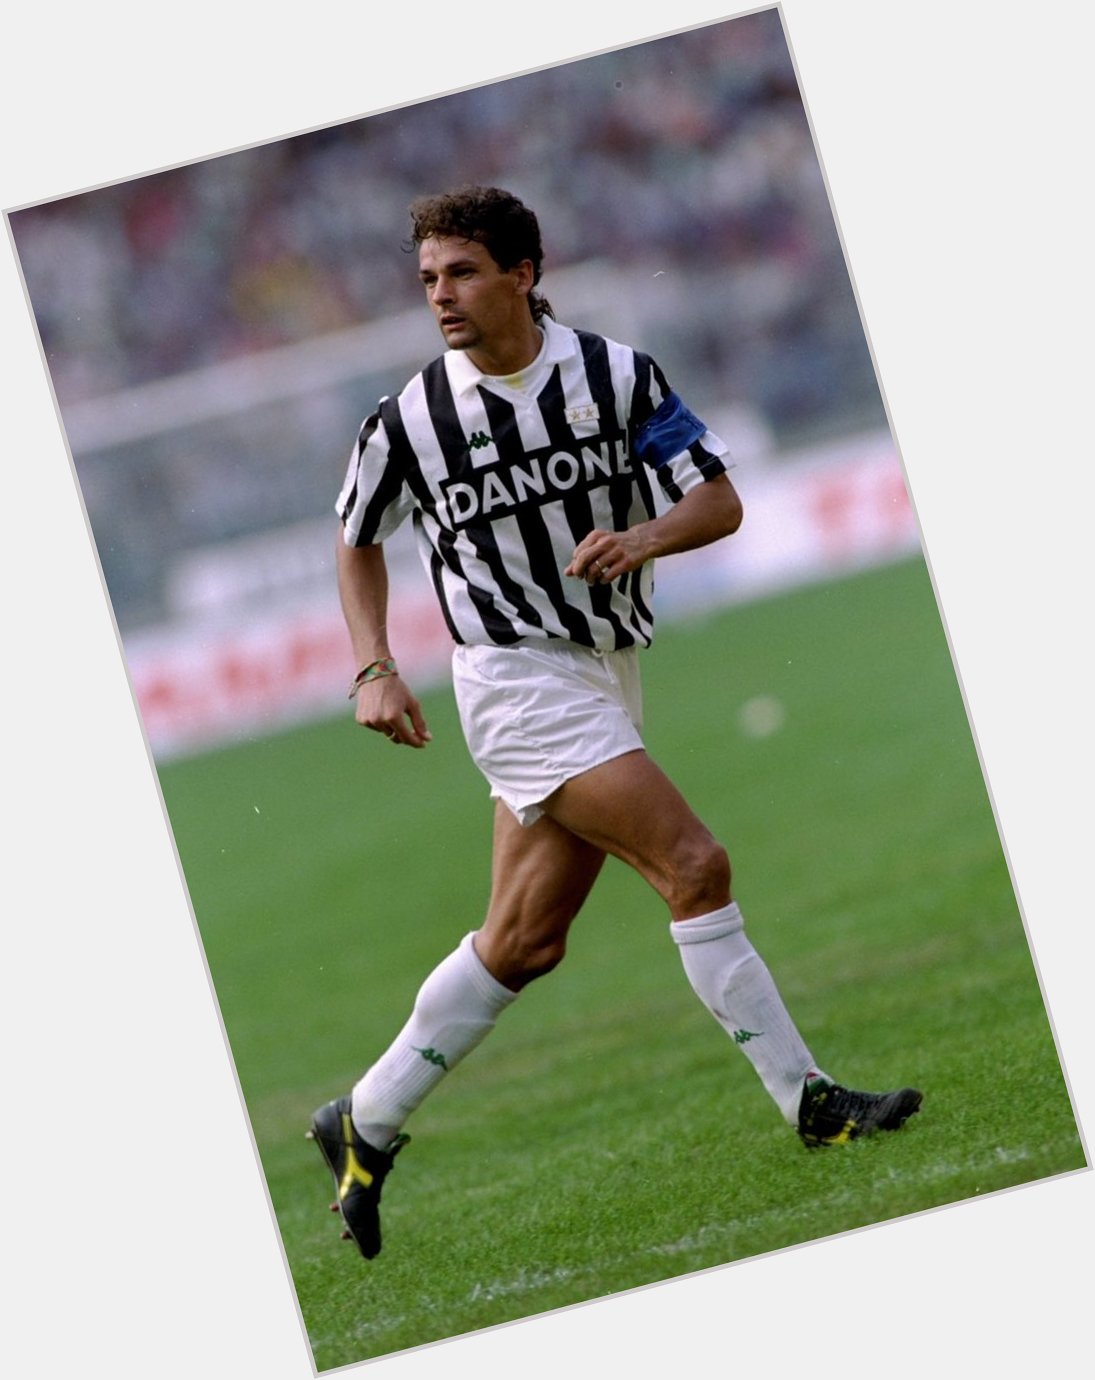 Happy birthday to Juventus legend Roberto Baggio, who turns 50 today.

Games: 200
Goals: 115 